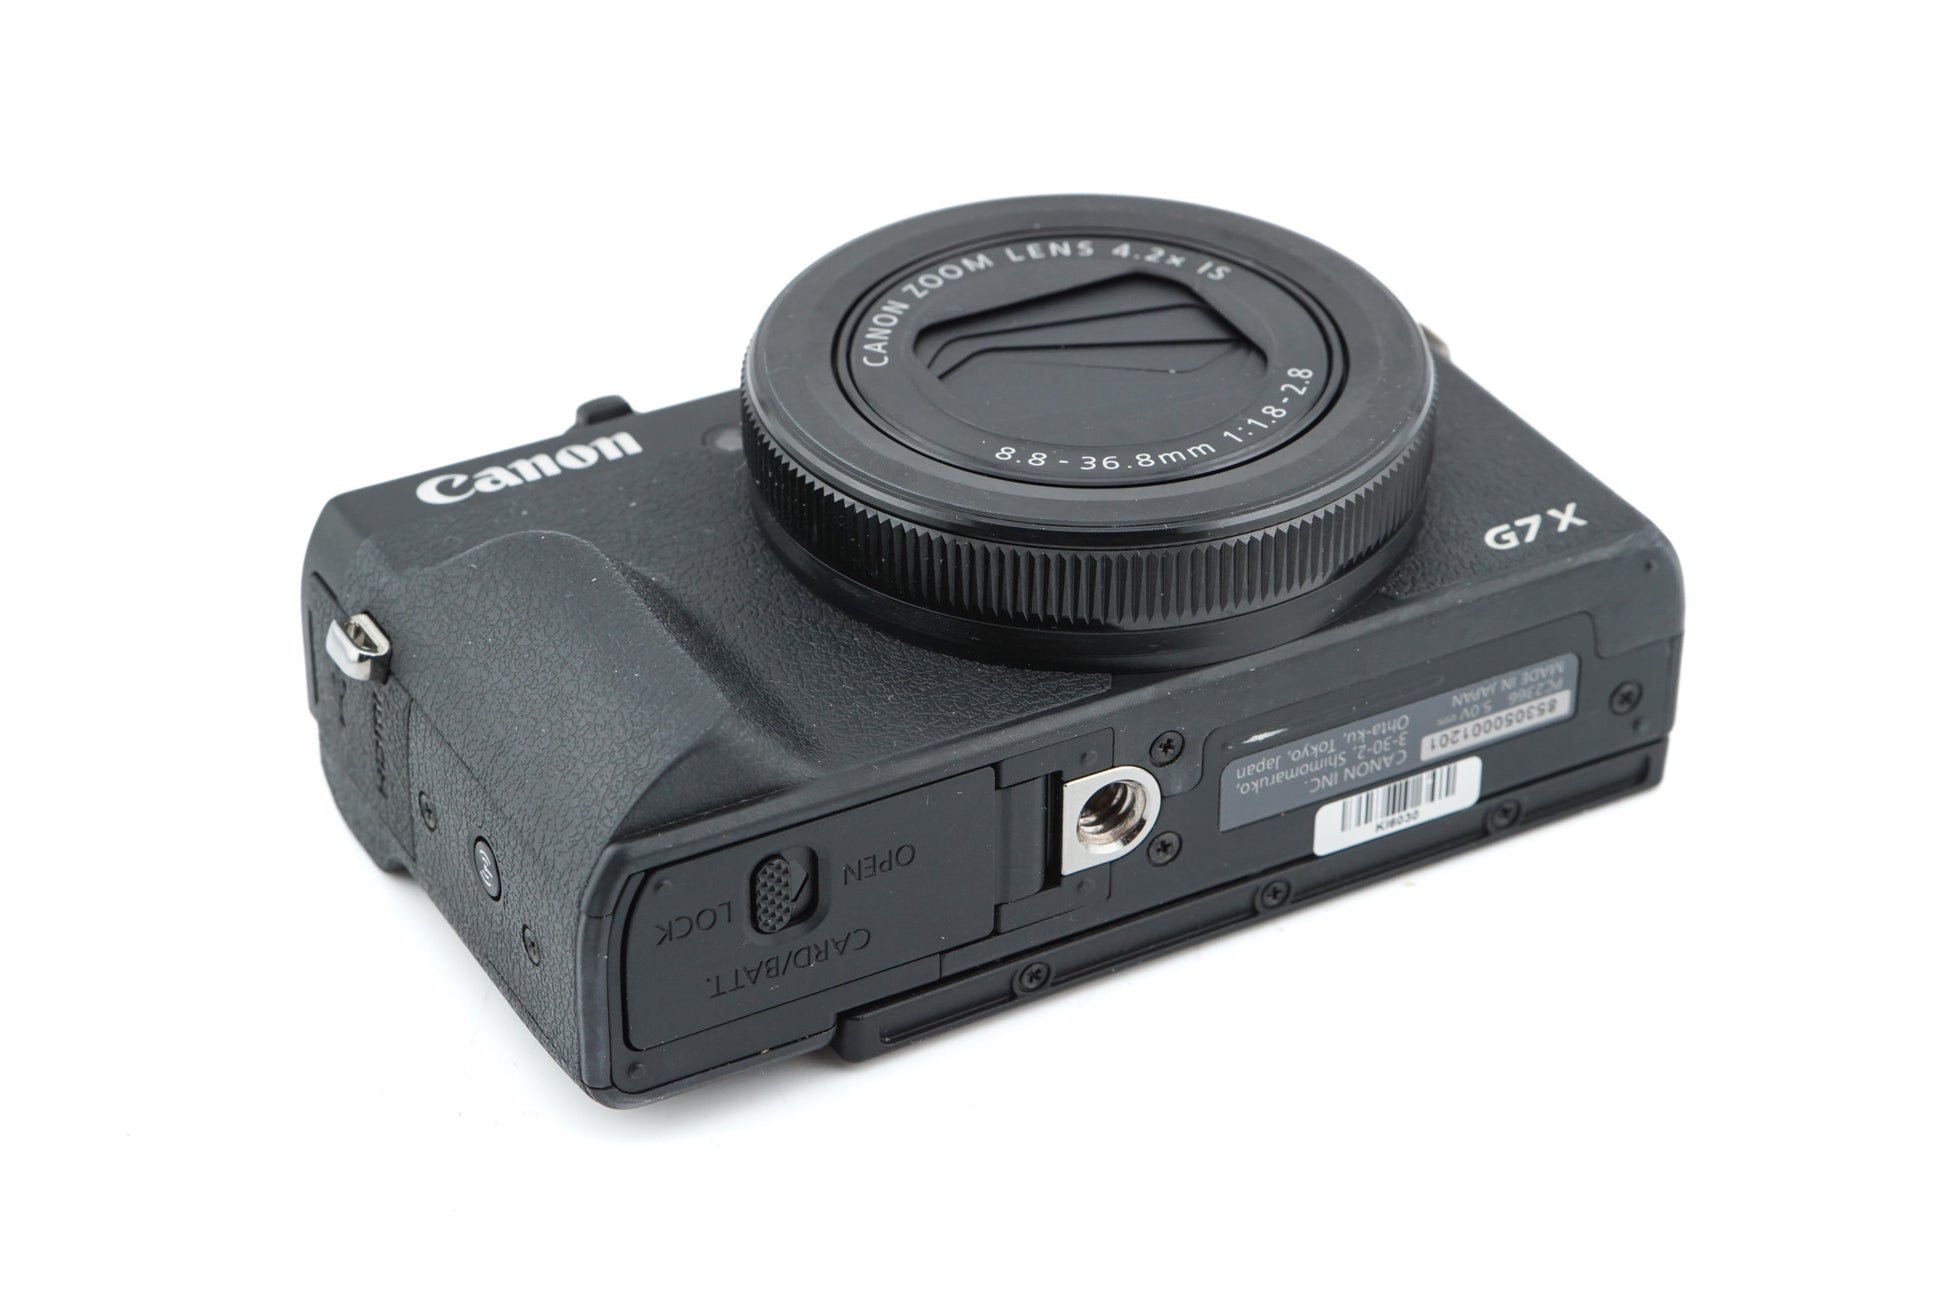 Canon Powershot G7X Mark II - Camera – Kamerastore